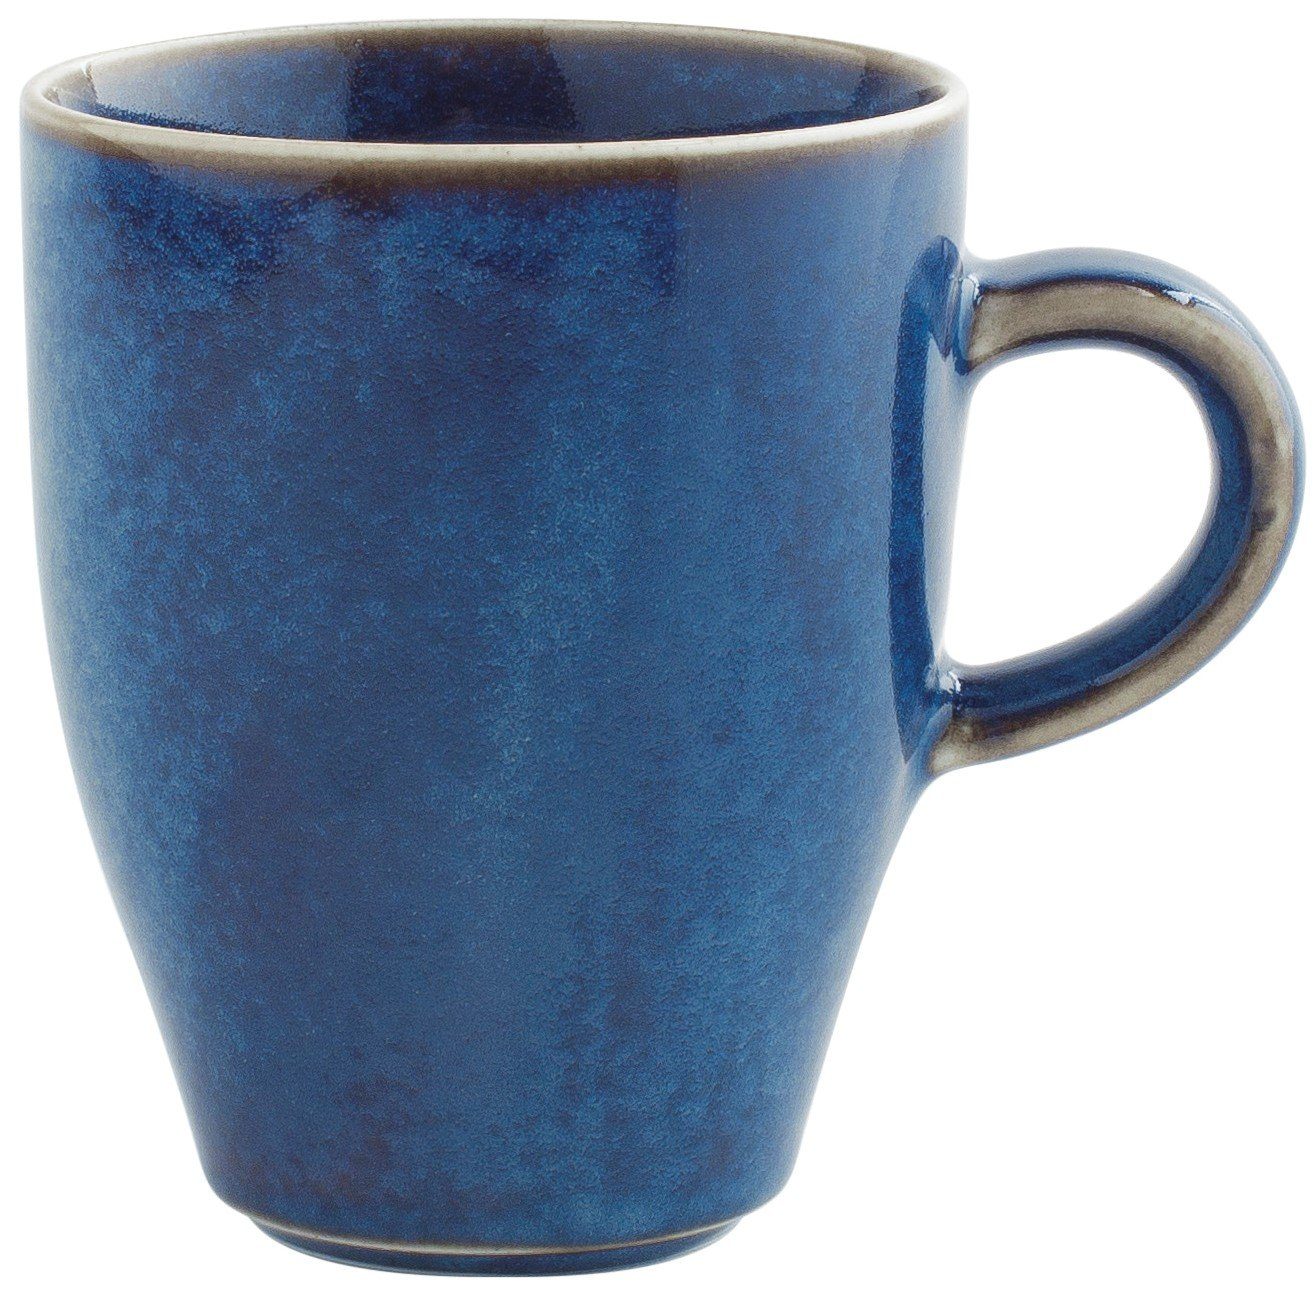 Kahla Made Germany 0,32 l, blue Handglasiert, Kaffeebecher Homestyle Porzellan, Becher in atlantic